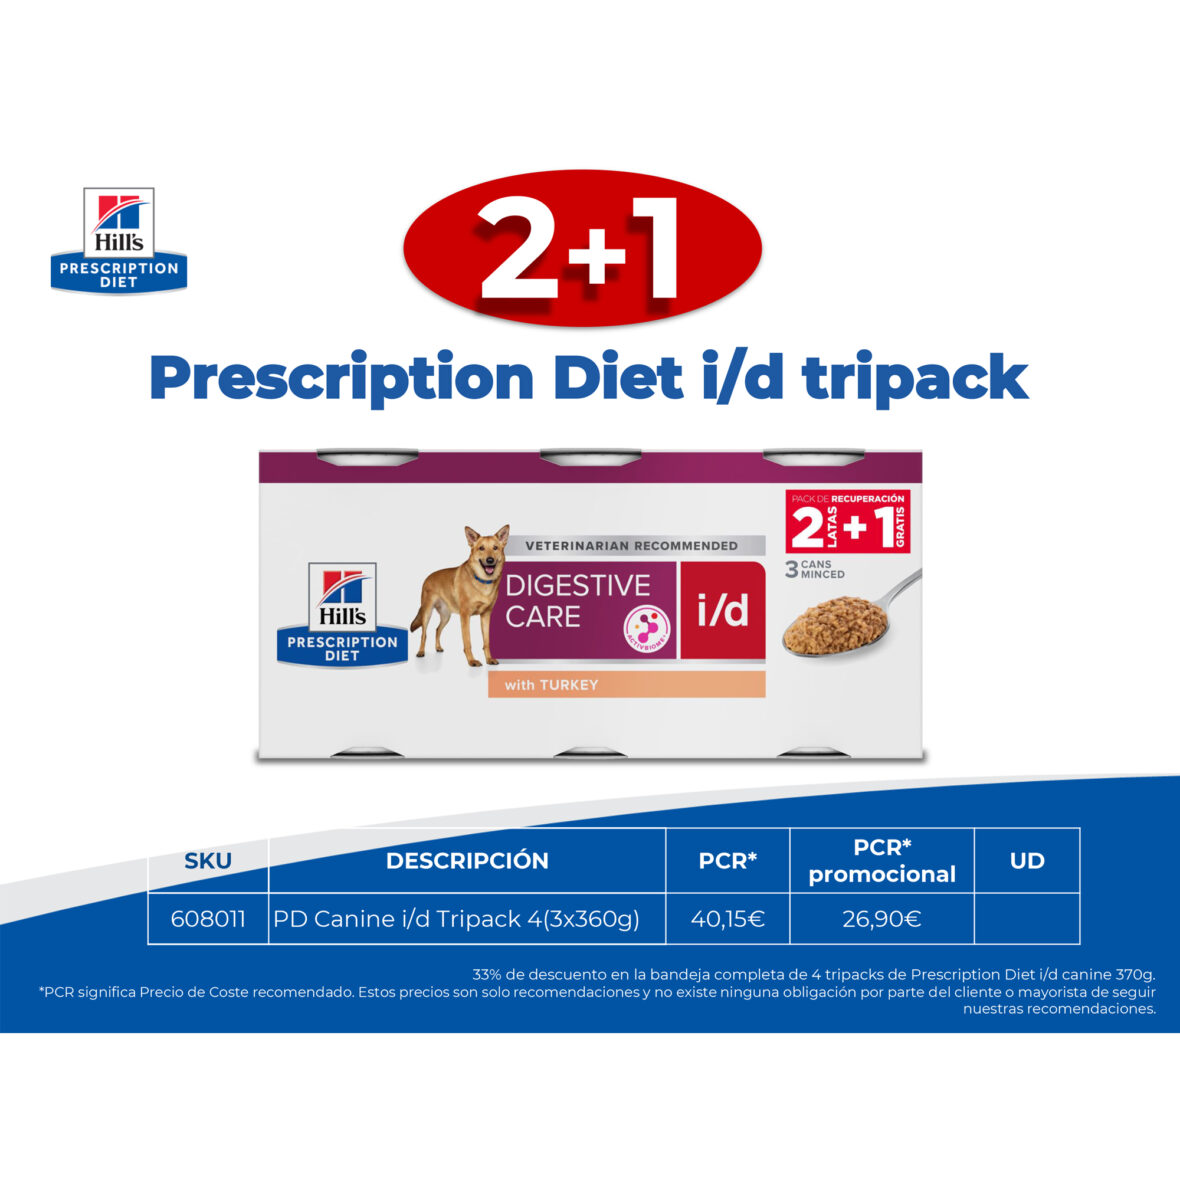 2+1 Prescription Diet i/d tripack